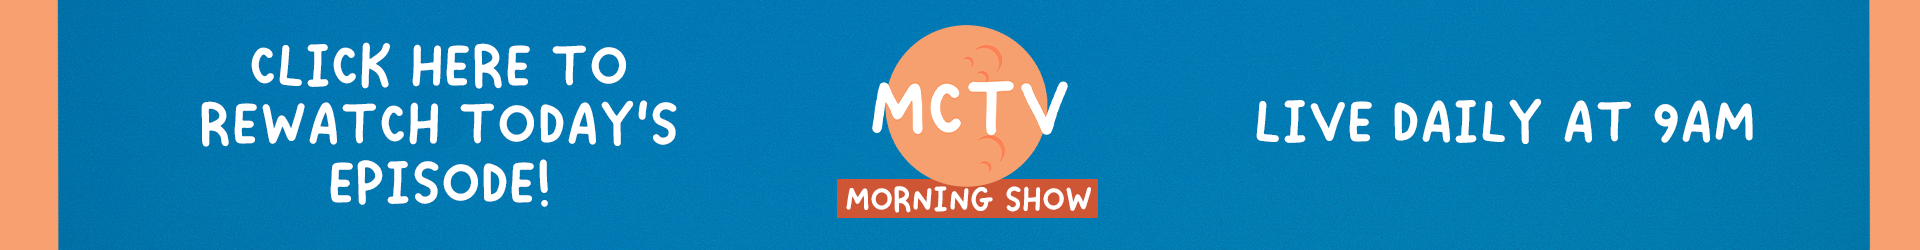 MCTV Banner